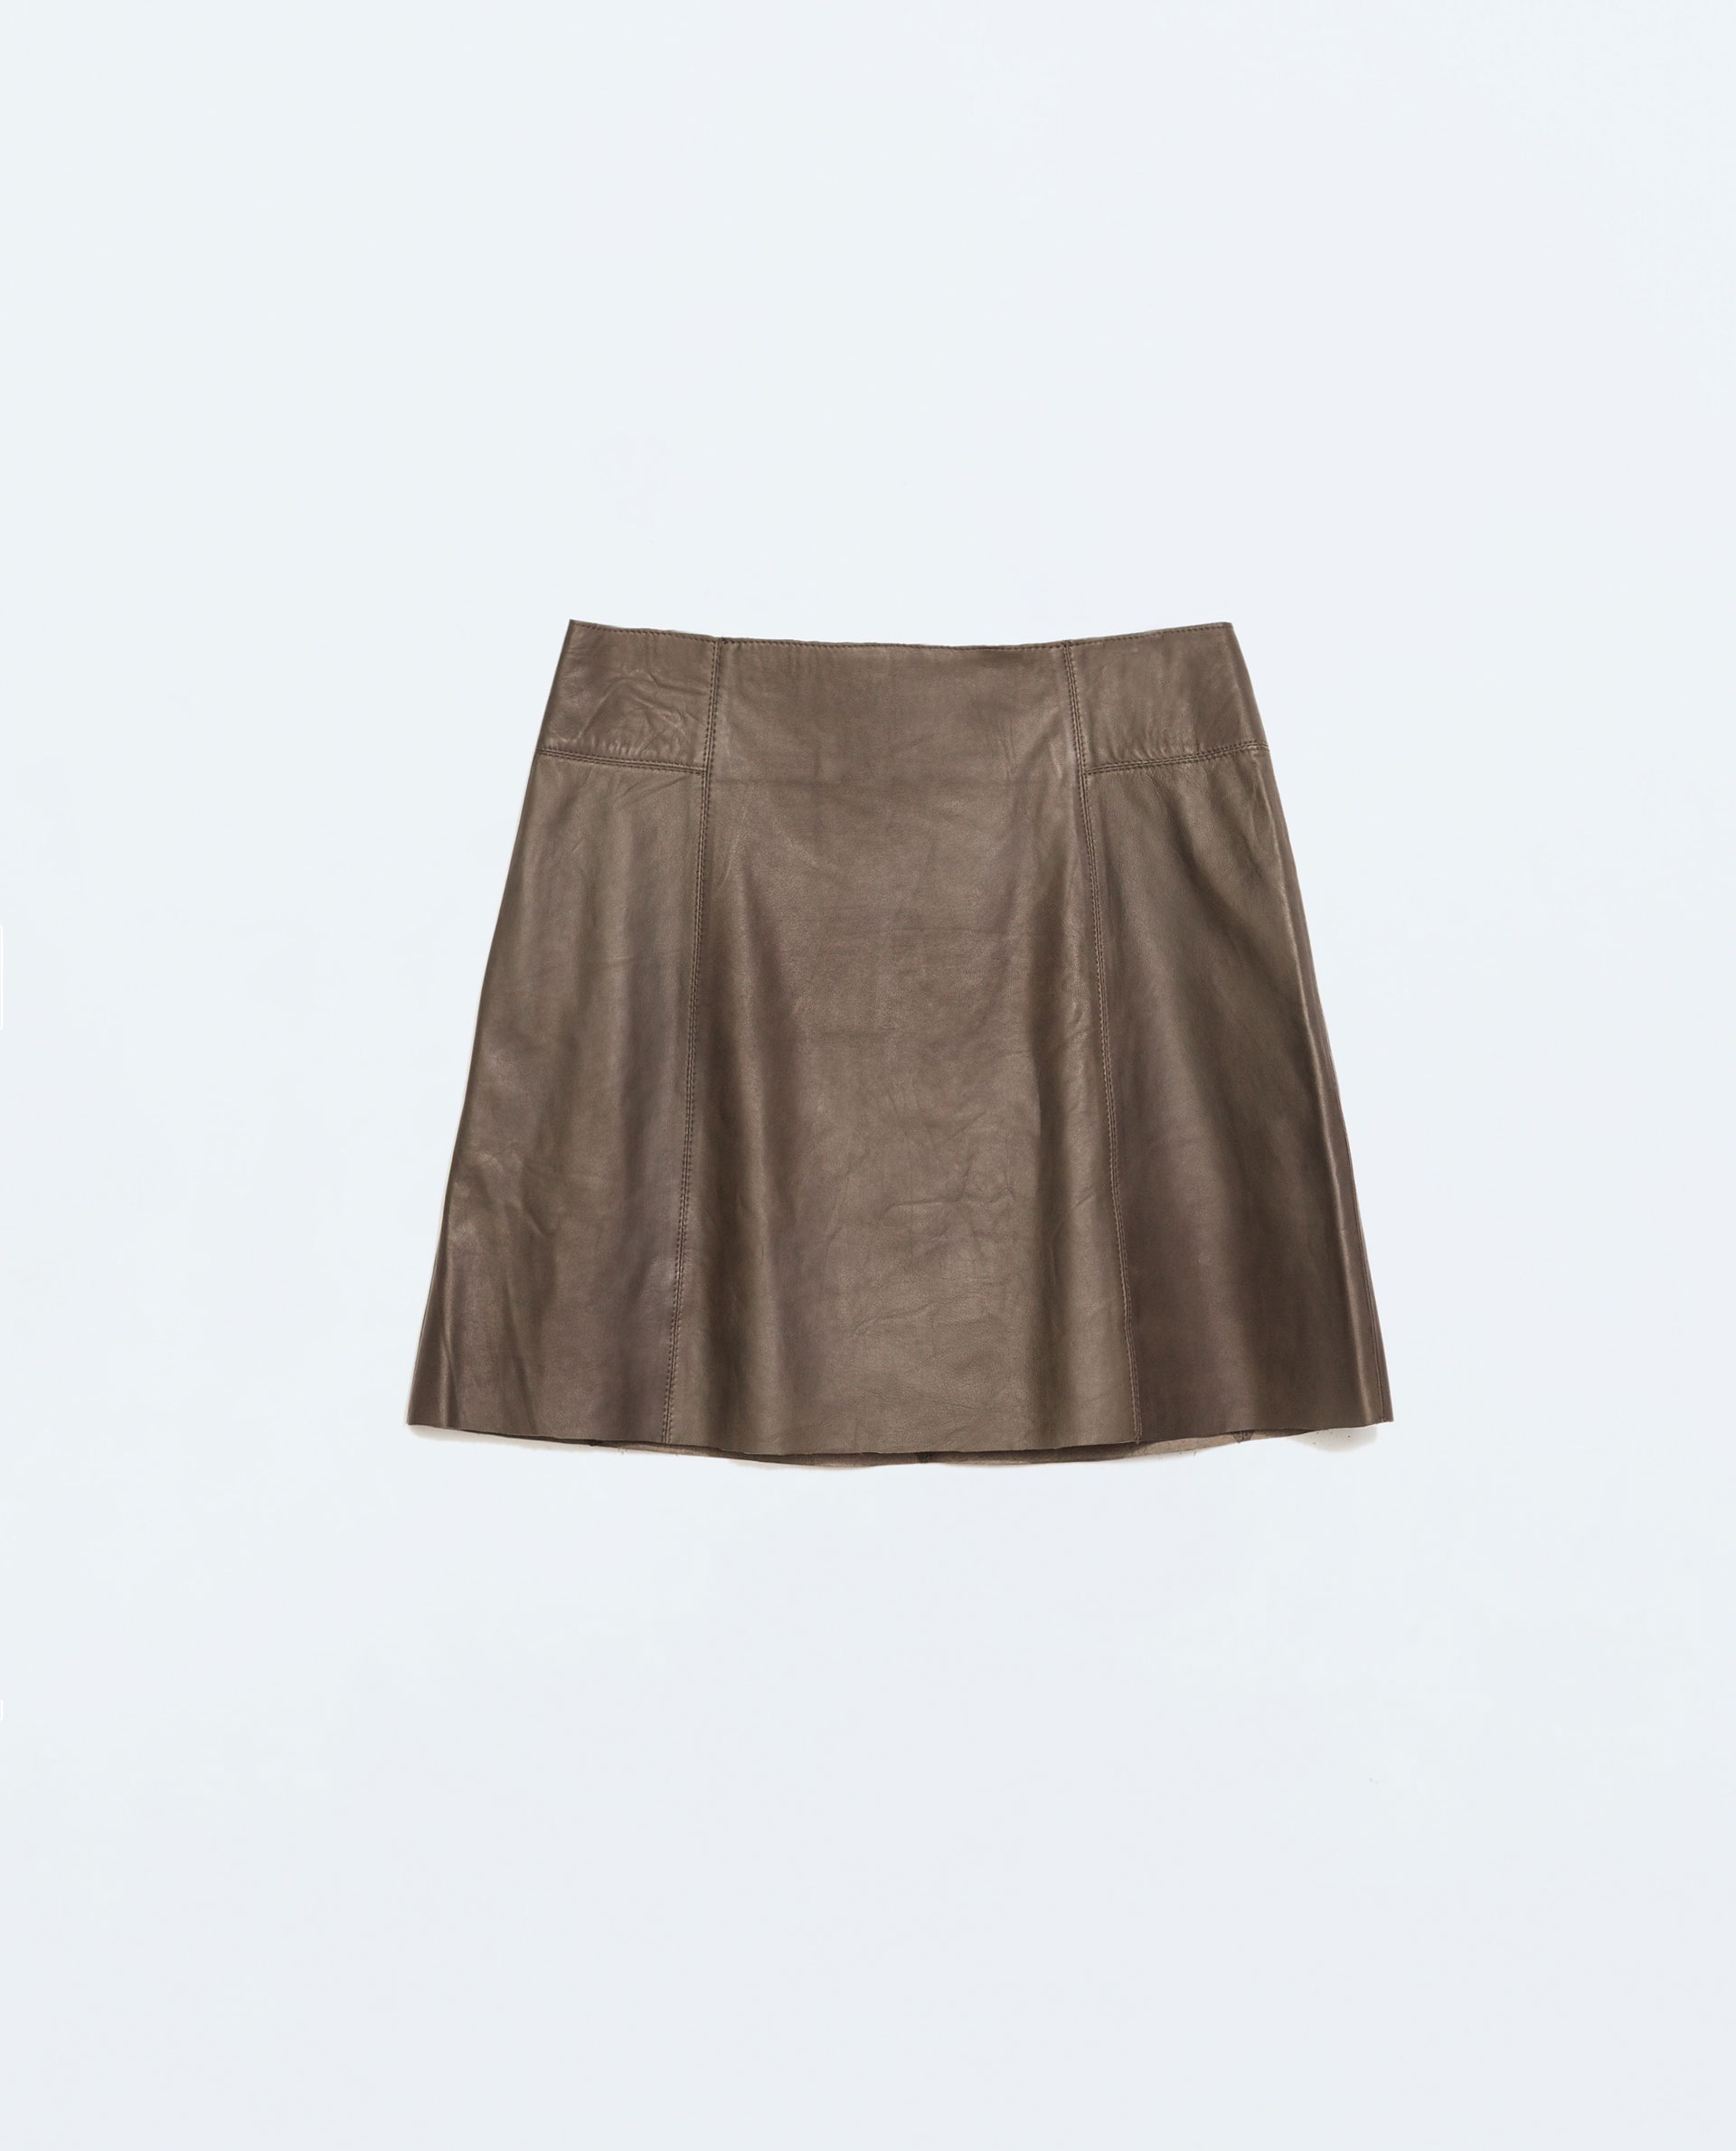 Zara Leather Mini Skirt in Natural | Lyst